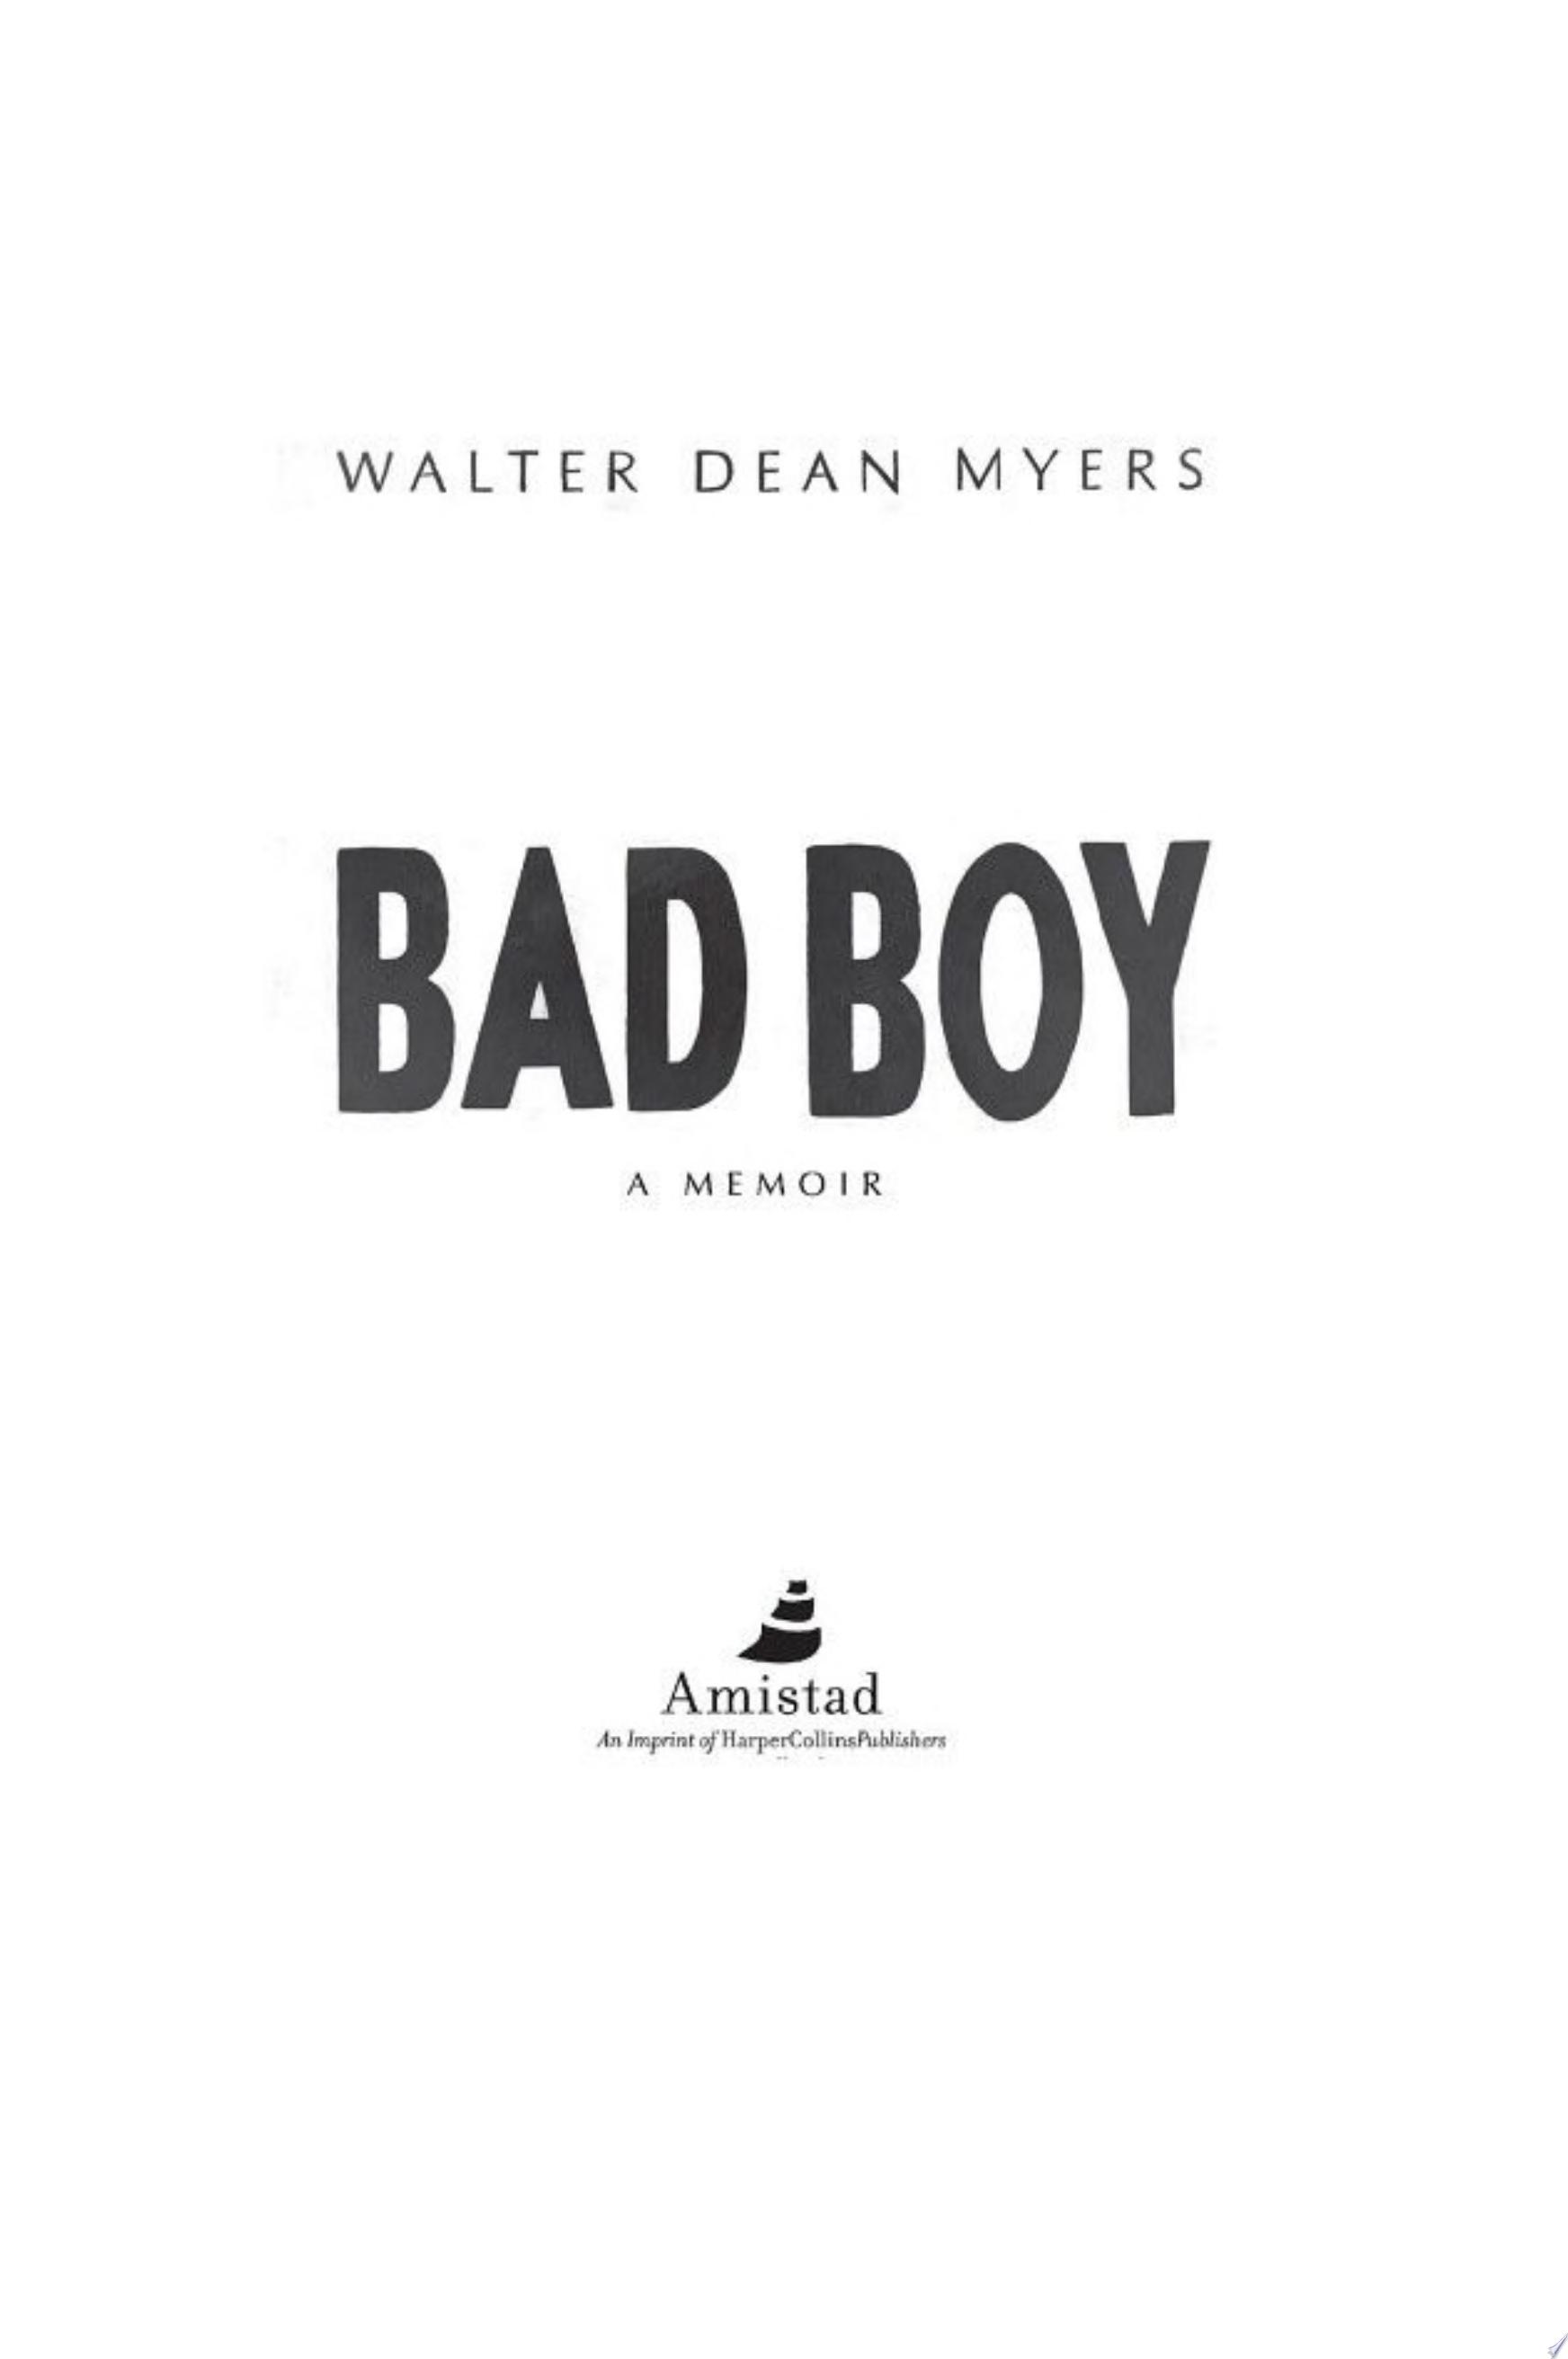 Image for "Bad Boy"